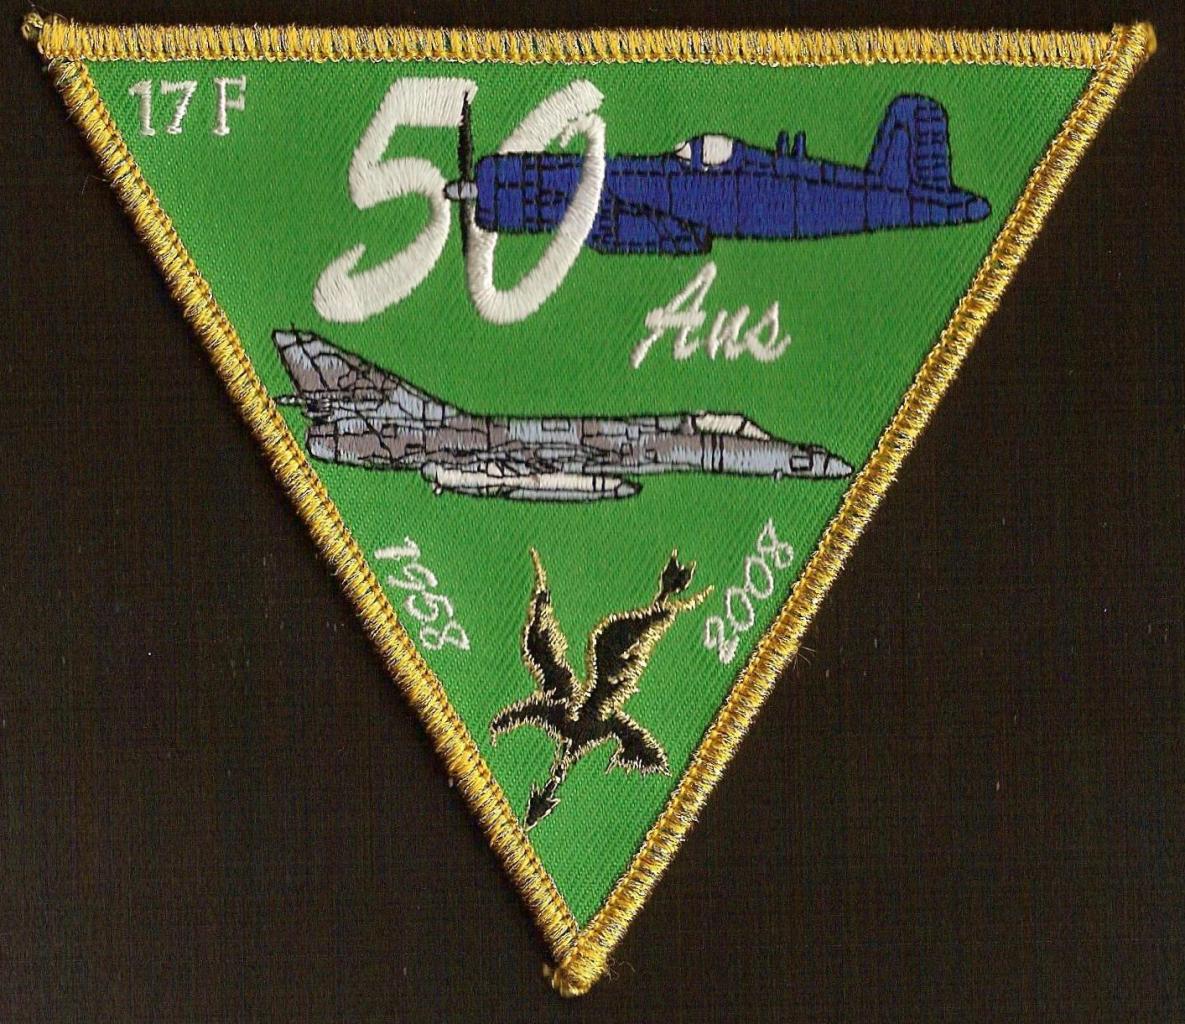 17 F - 50 ans - mod 2